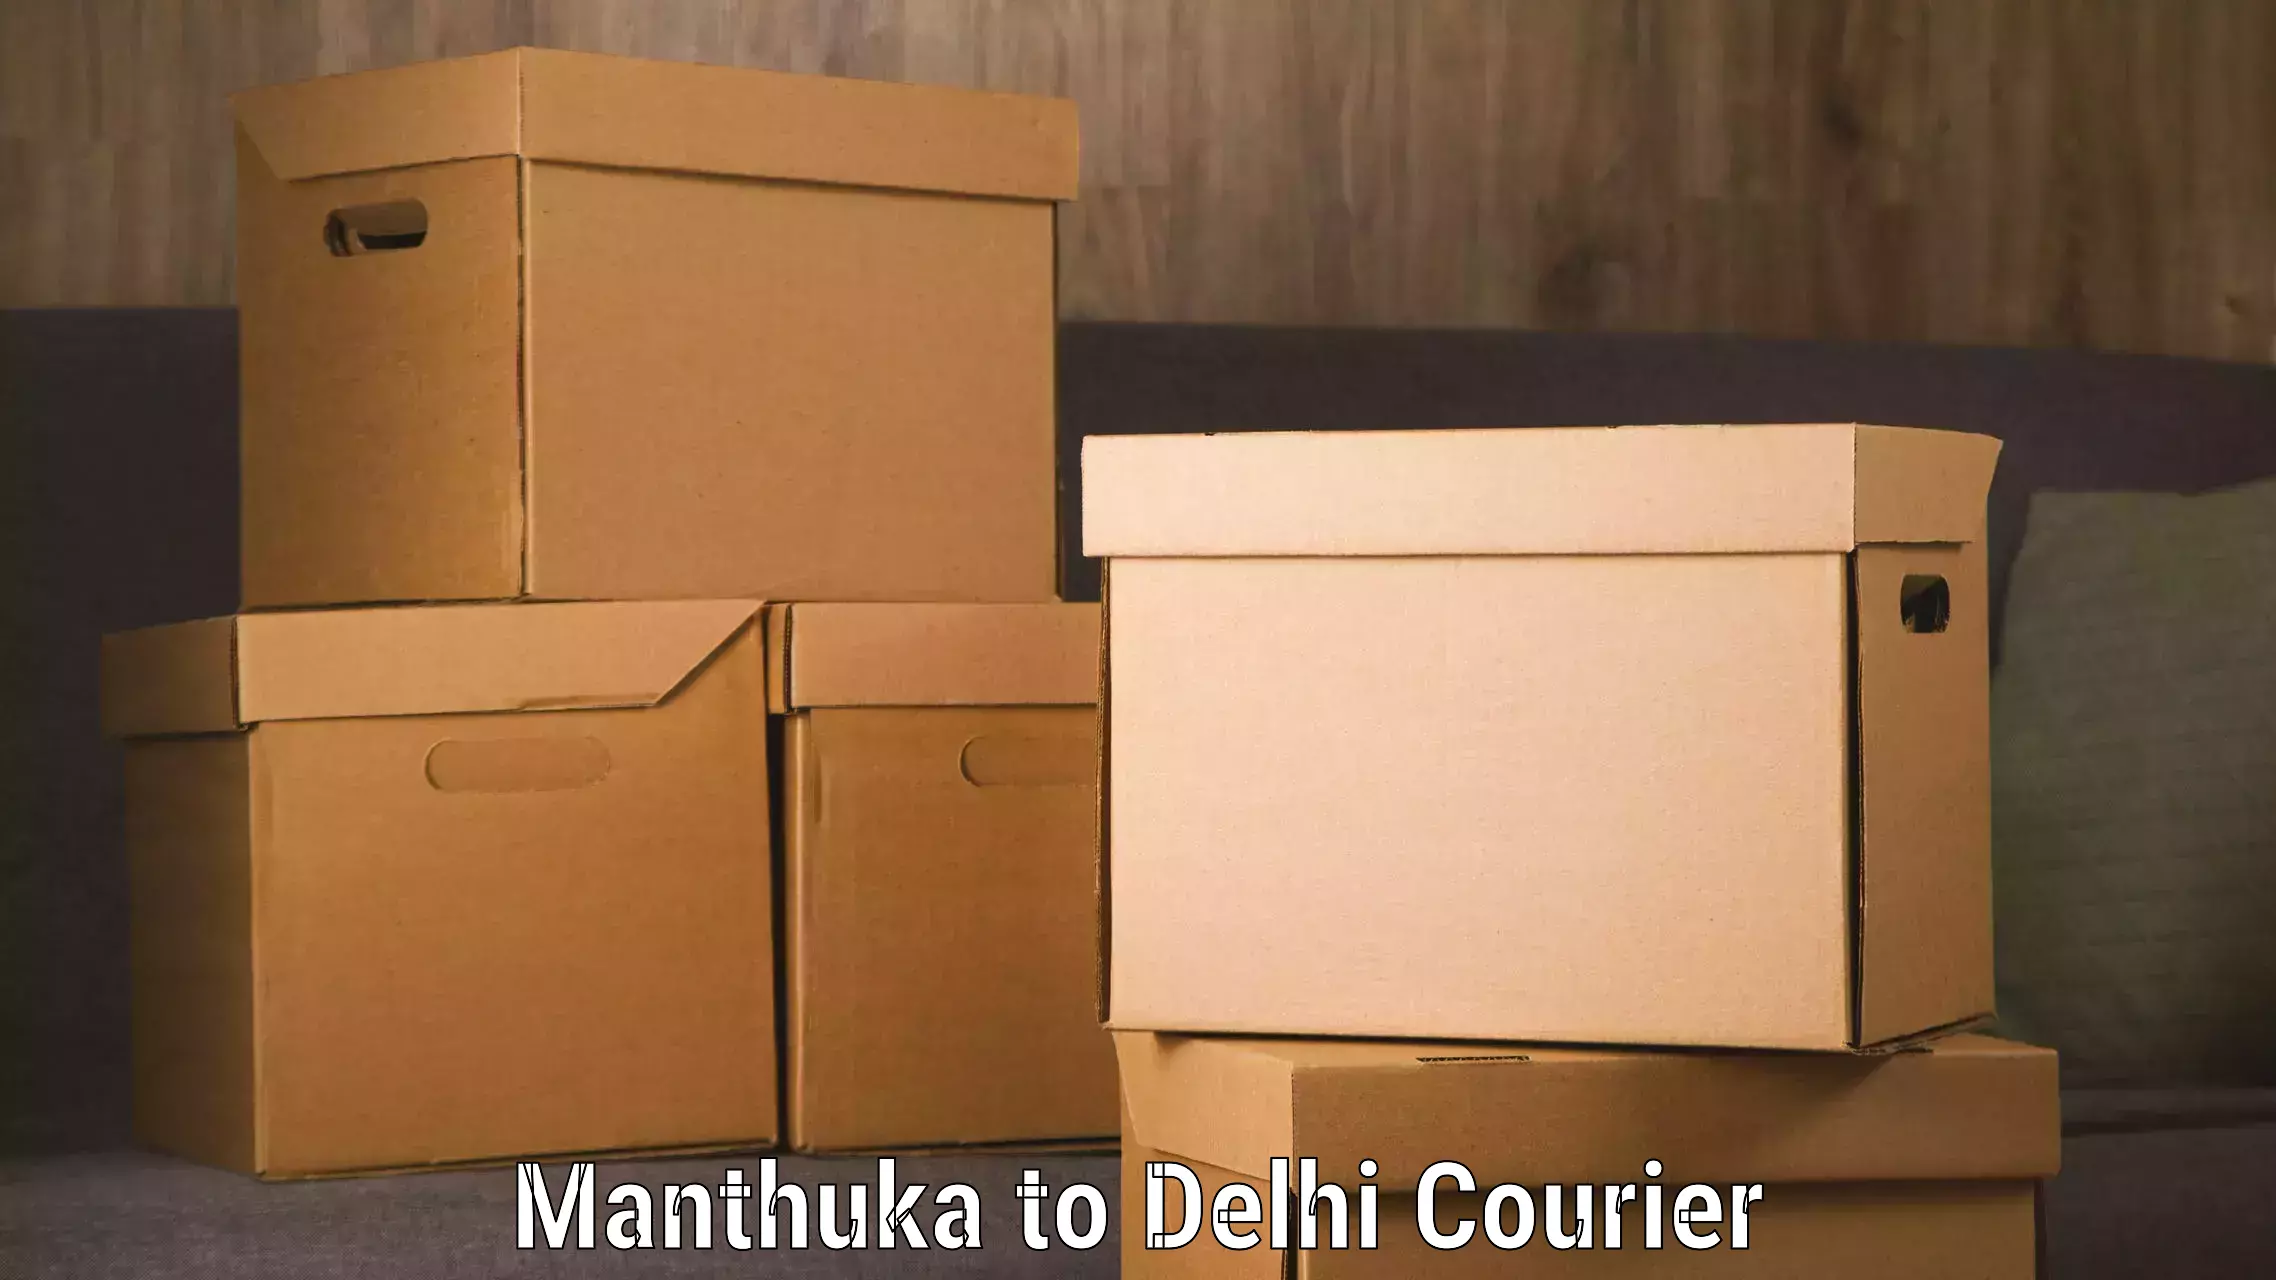 Enhanced tracking features Manthuka to Delhi